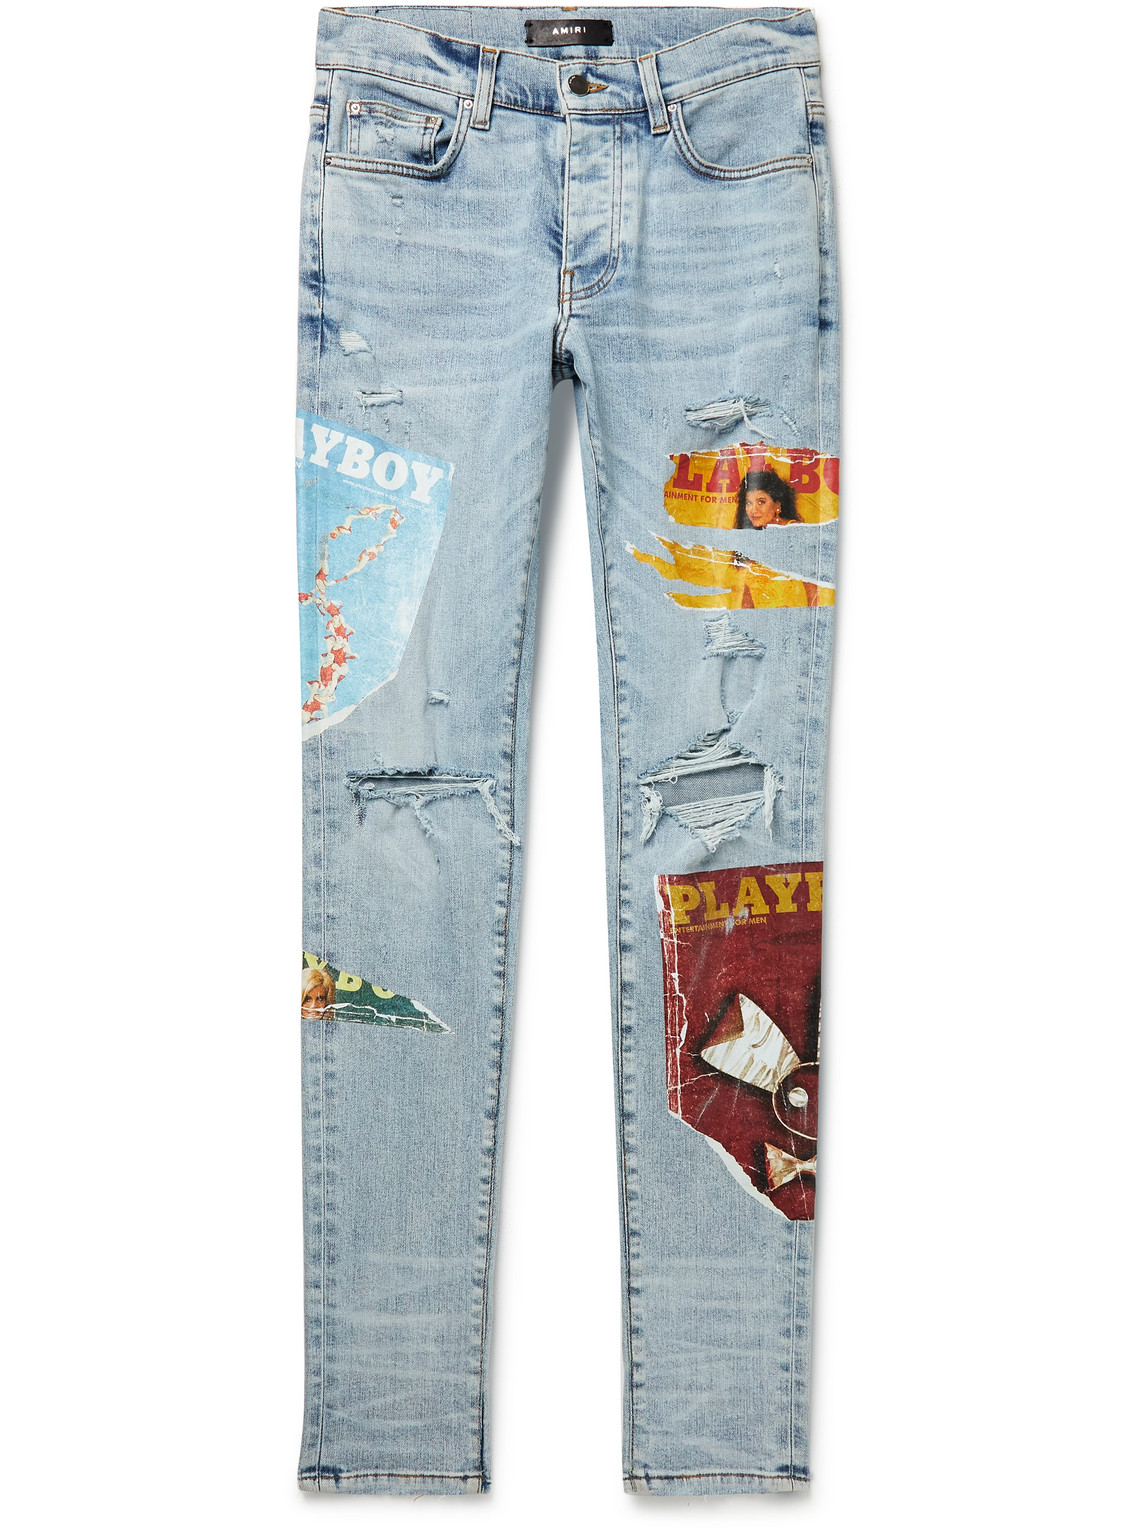 Playboy Skinny-Fit Distressed Printed Stretch-Denim Jeans